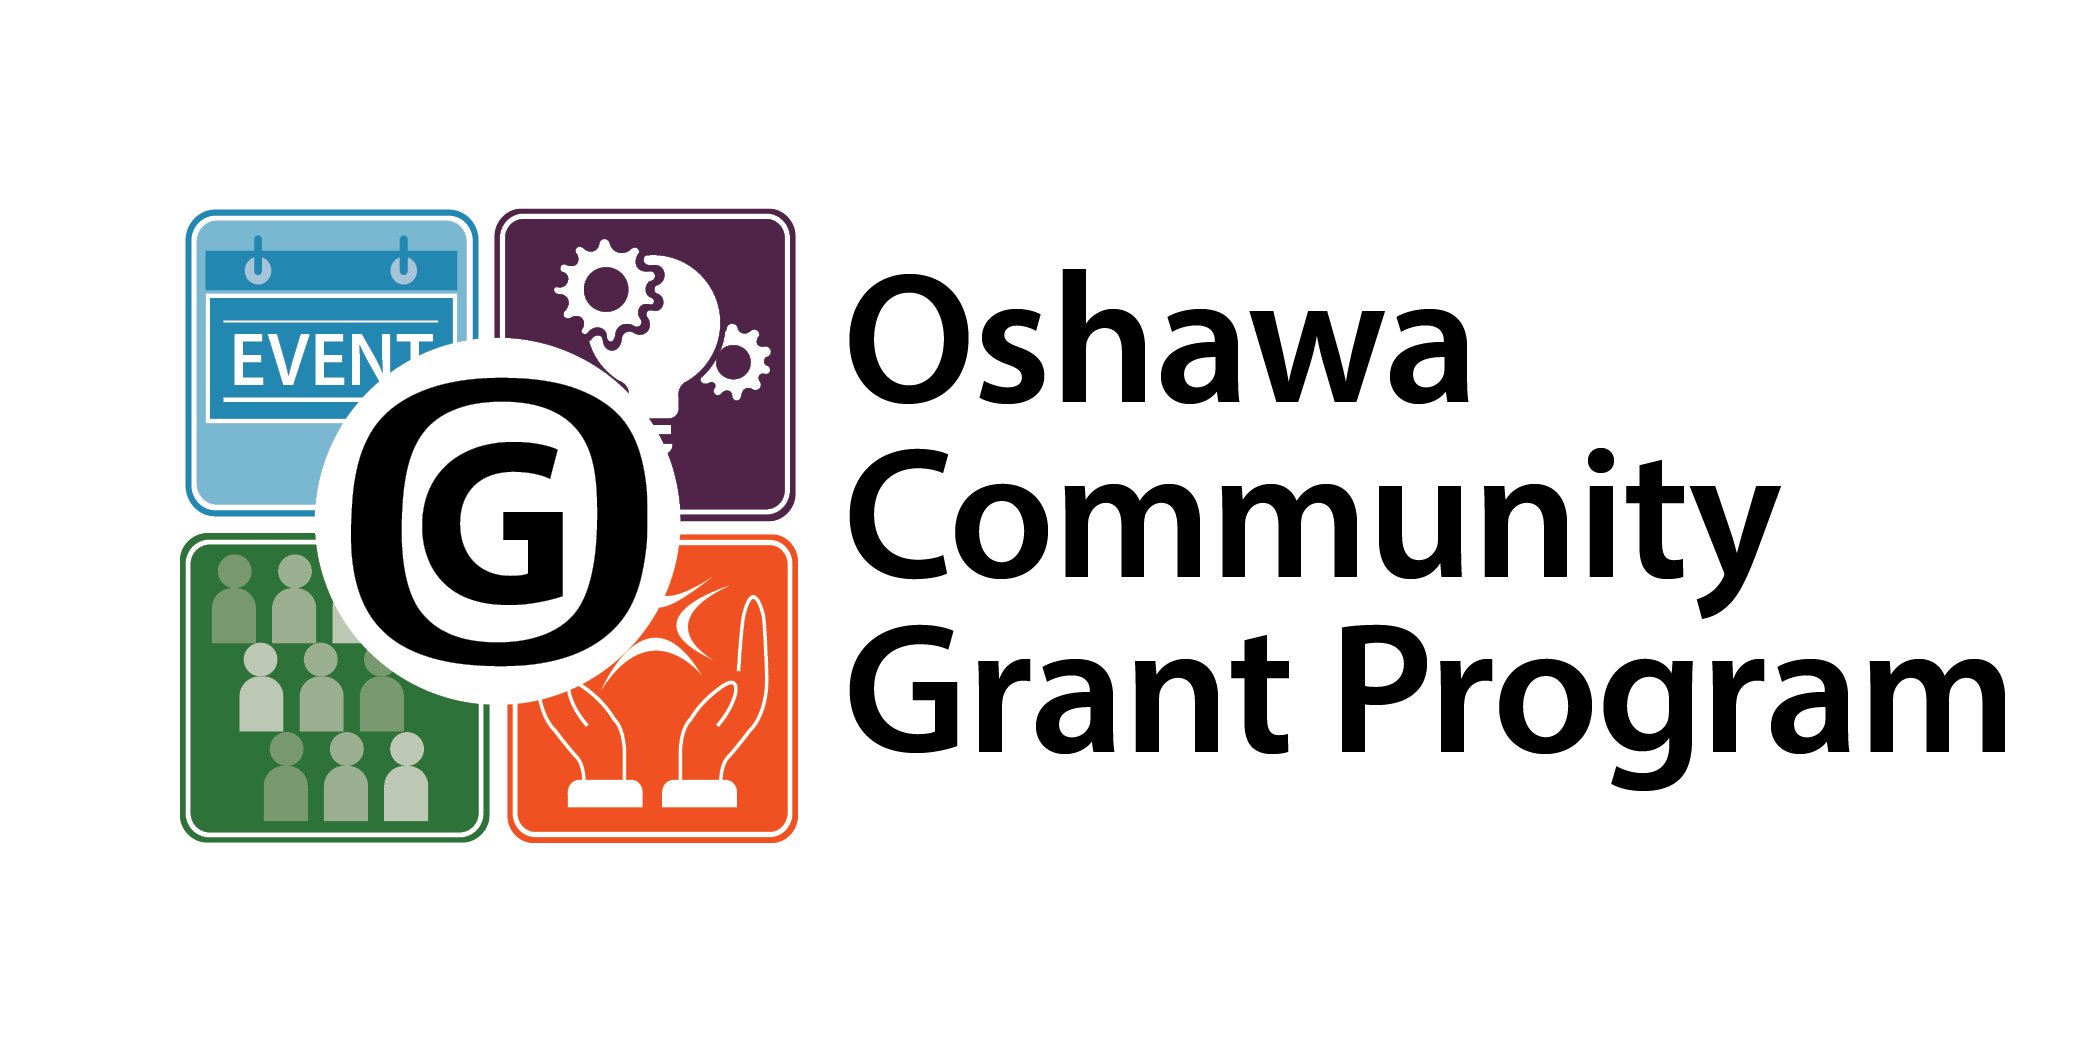 Oshawa Community Grant program icons